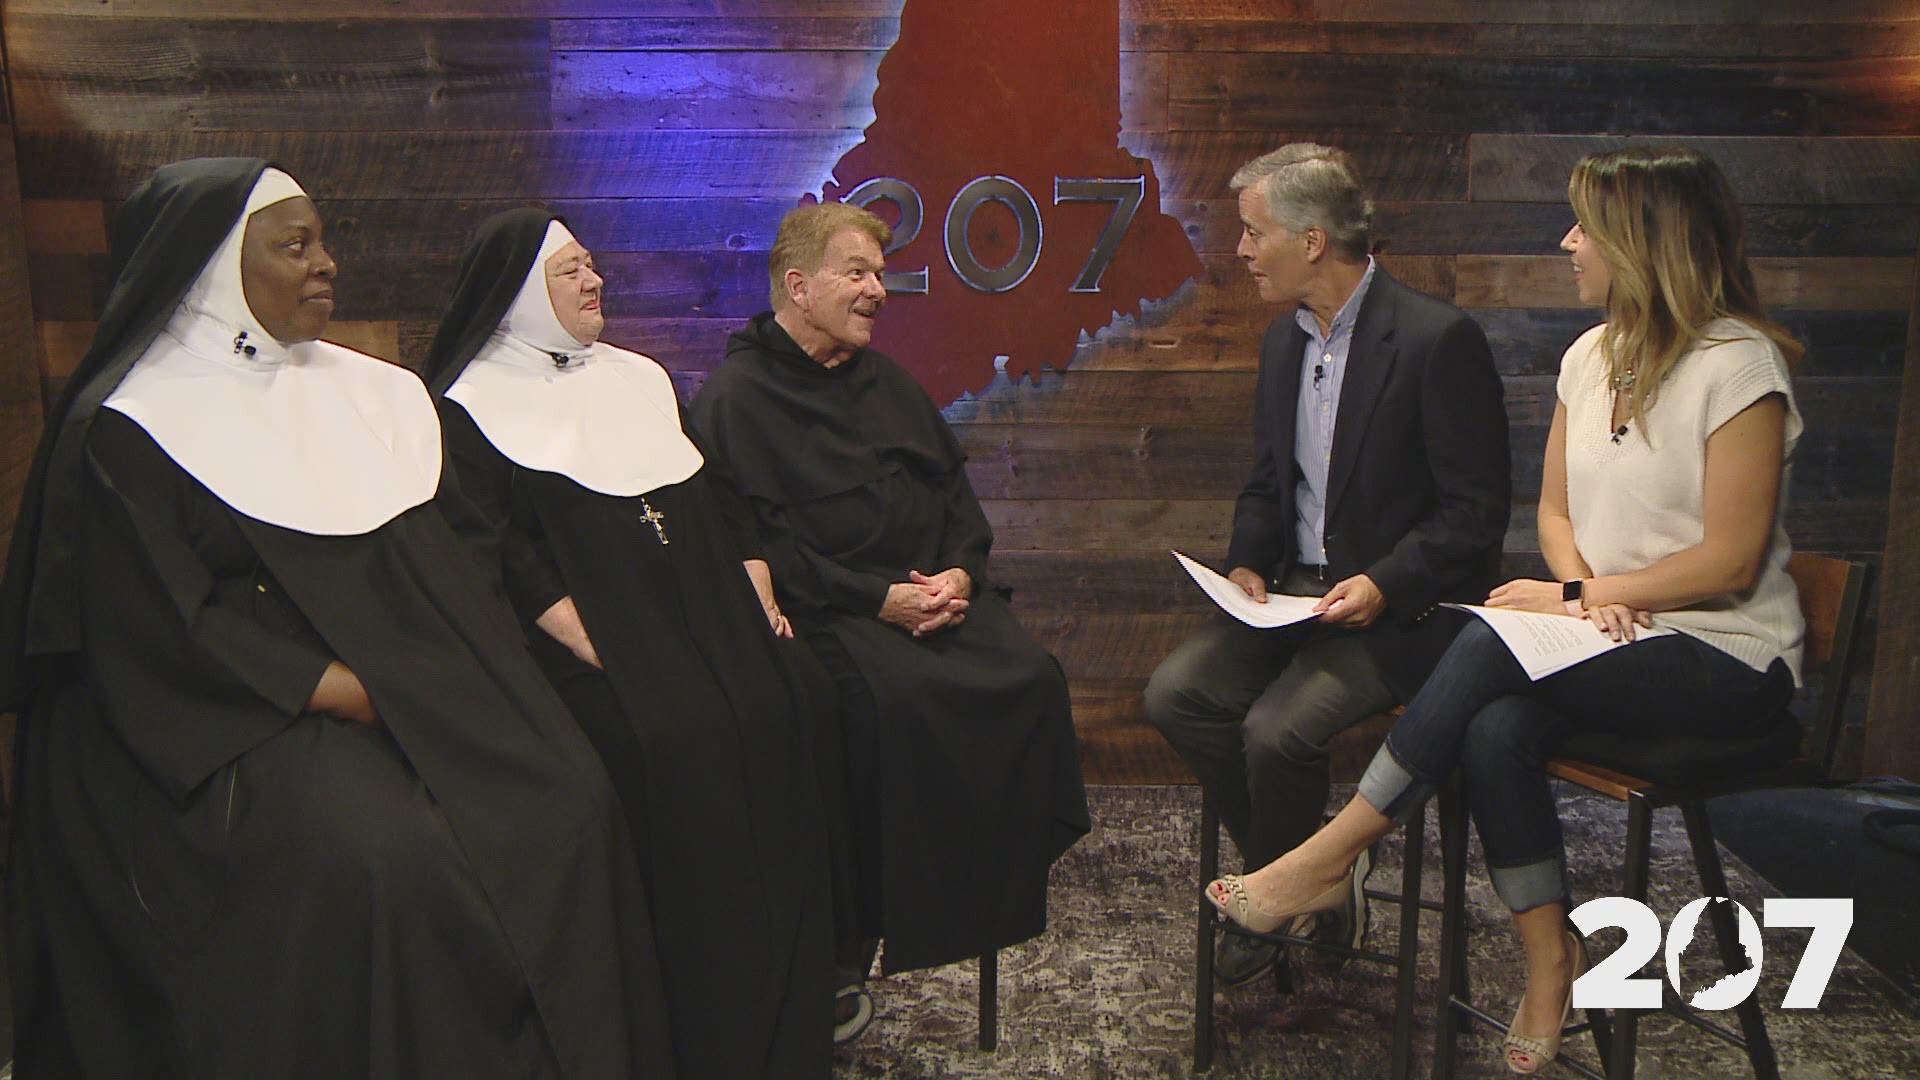 A comedy about nuns.